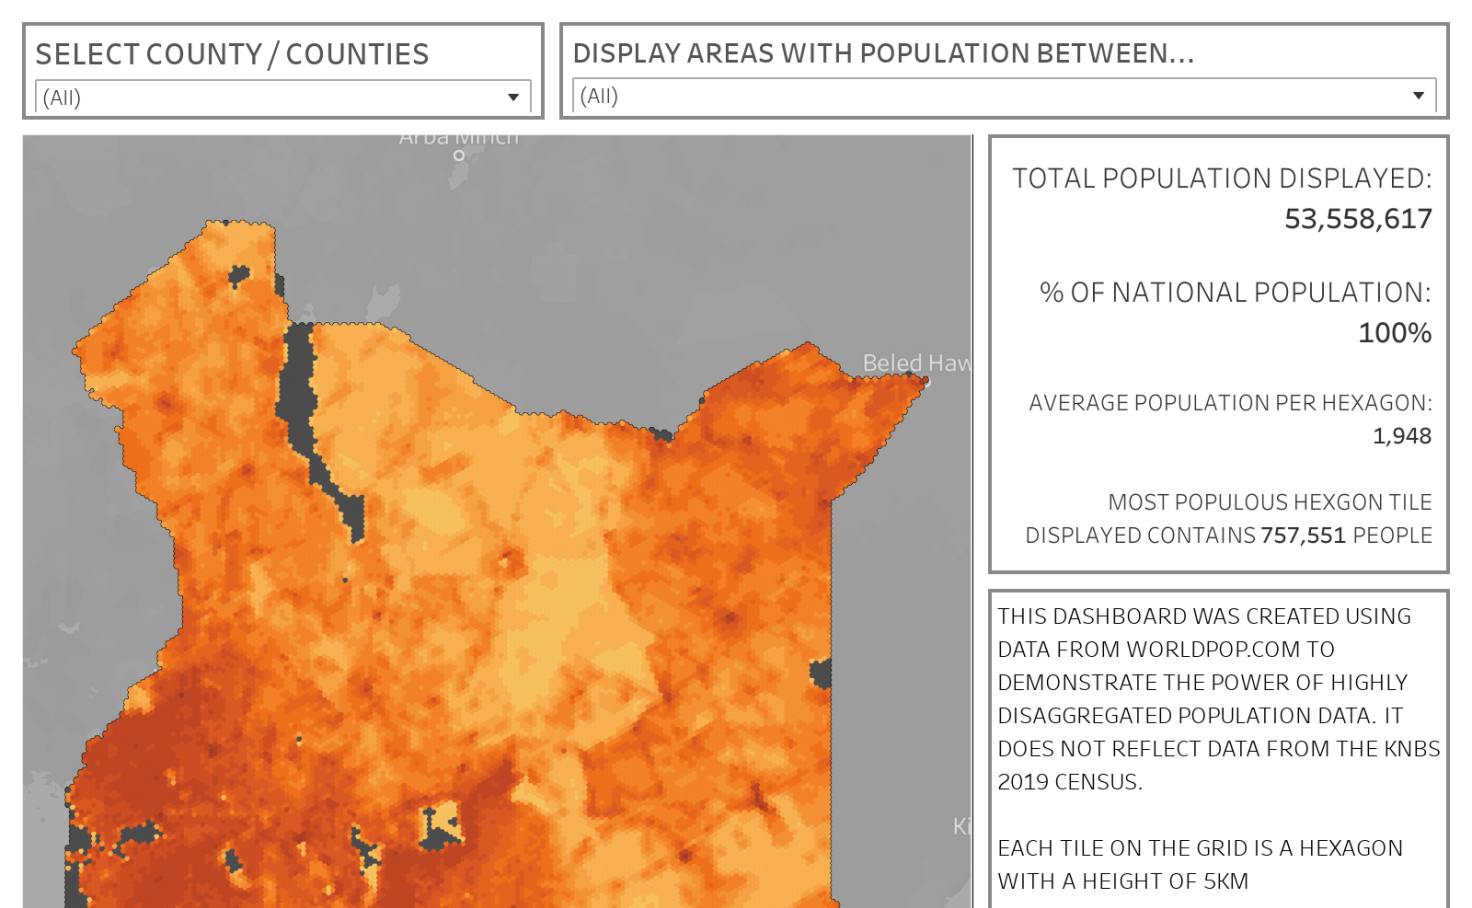 KENYA POPULATION HEX MAP EXAMPLE David Taylor Tableau Public